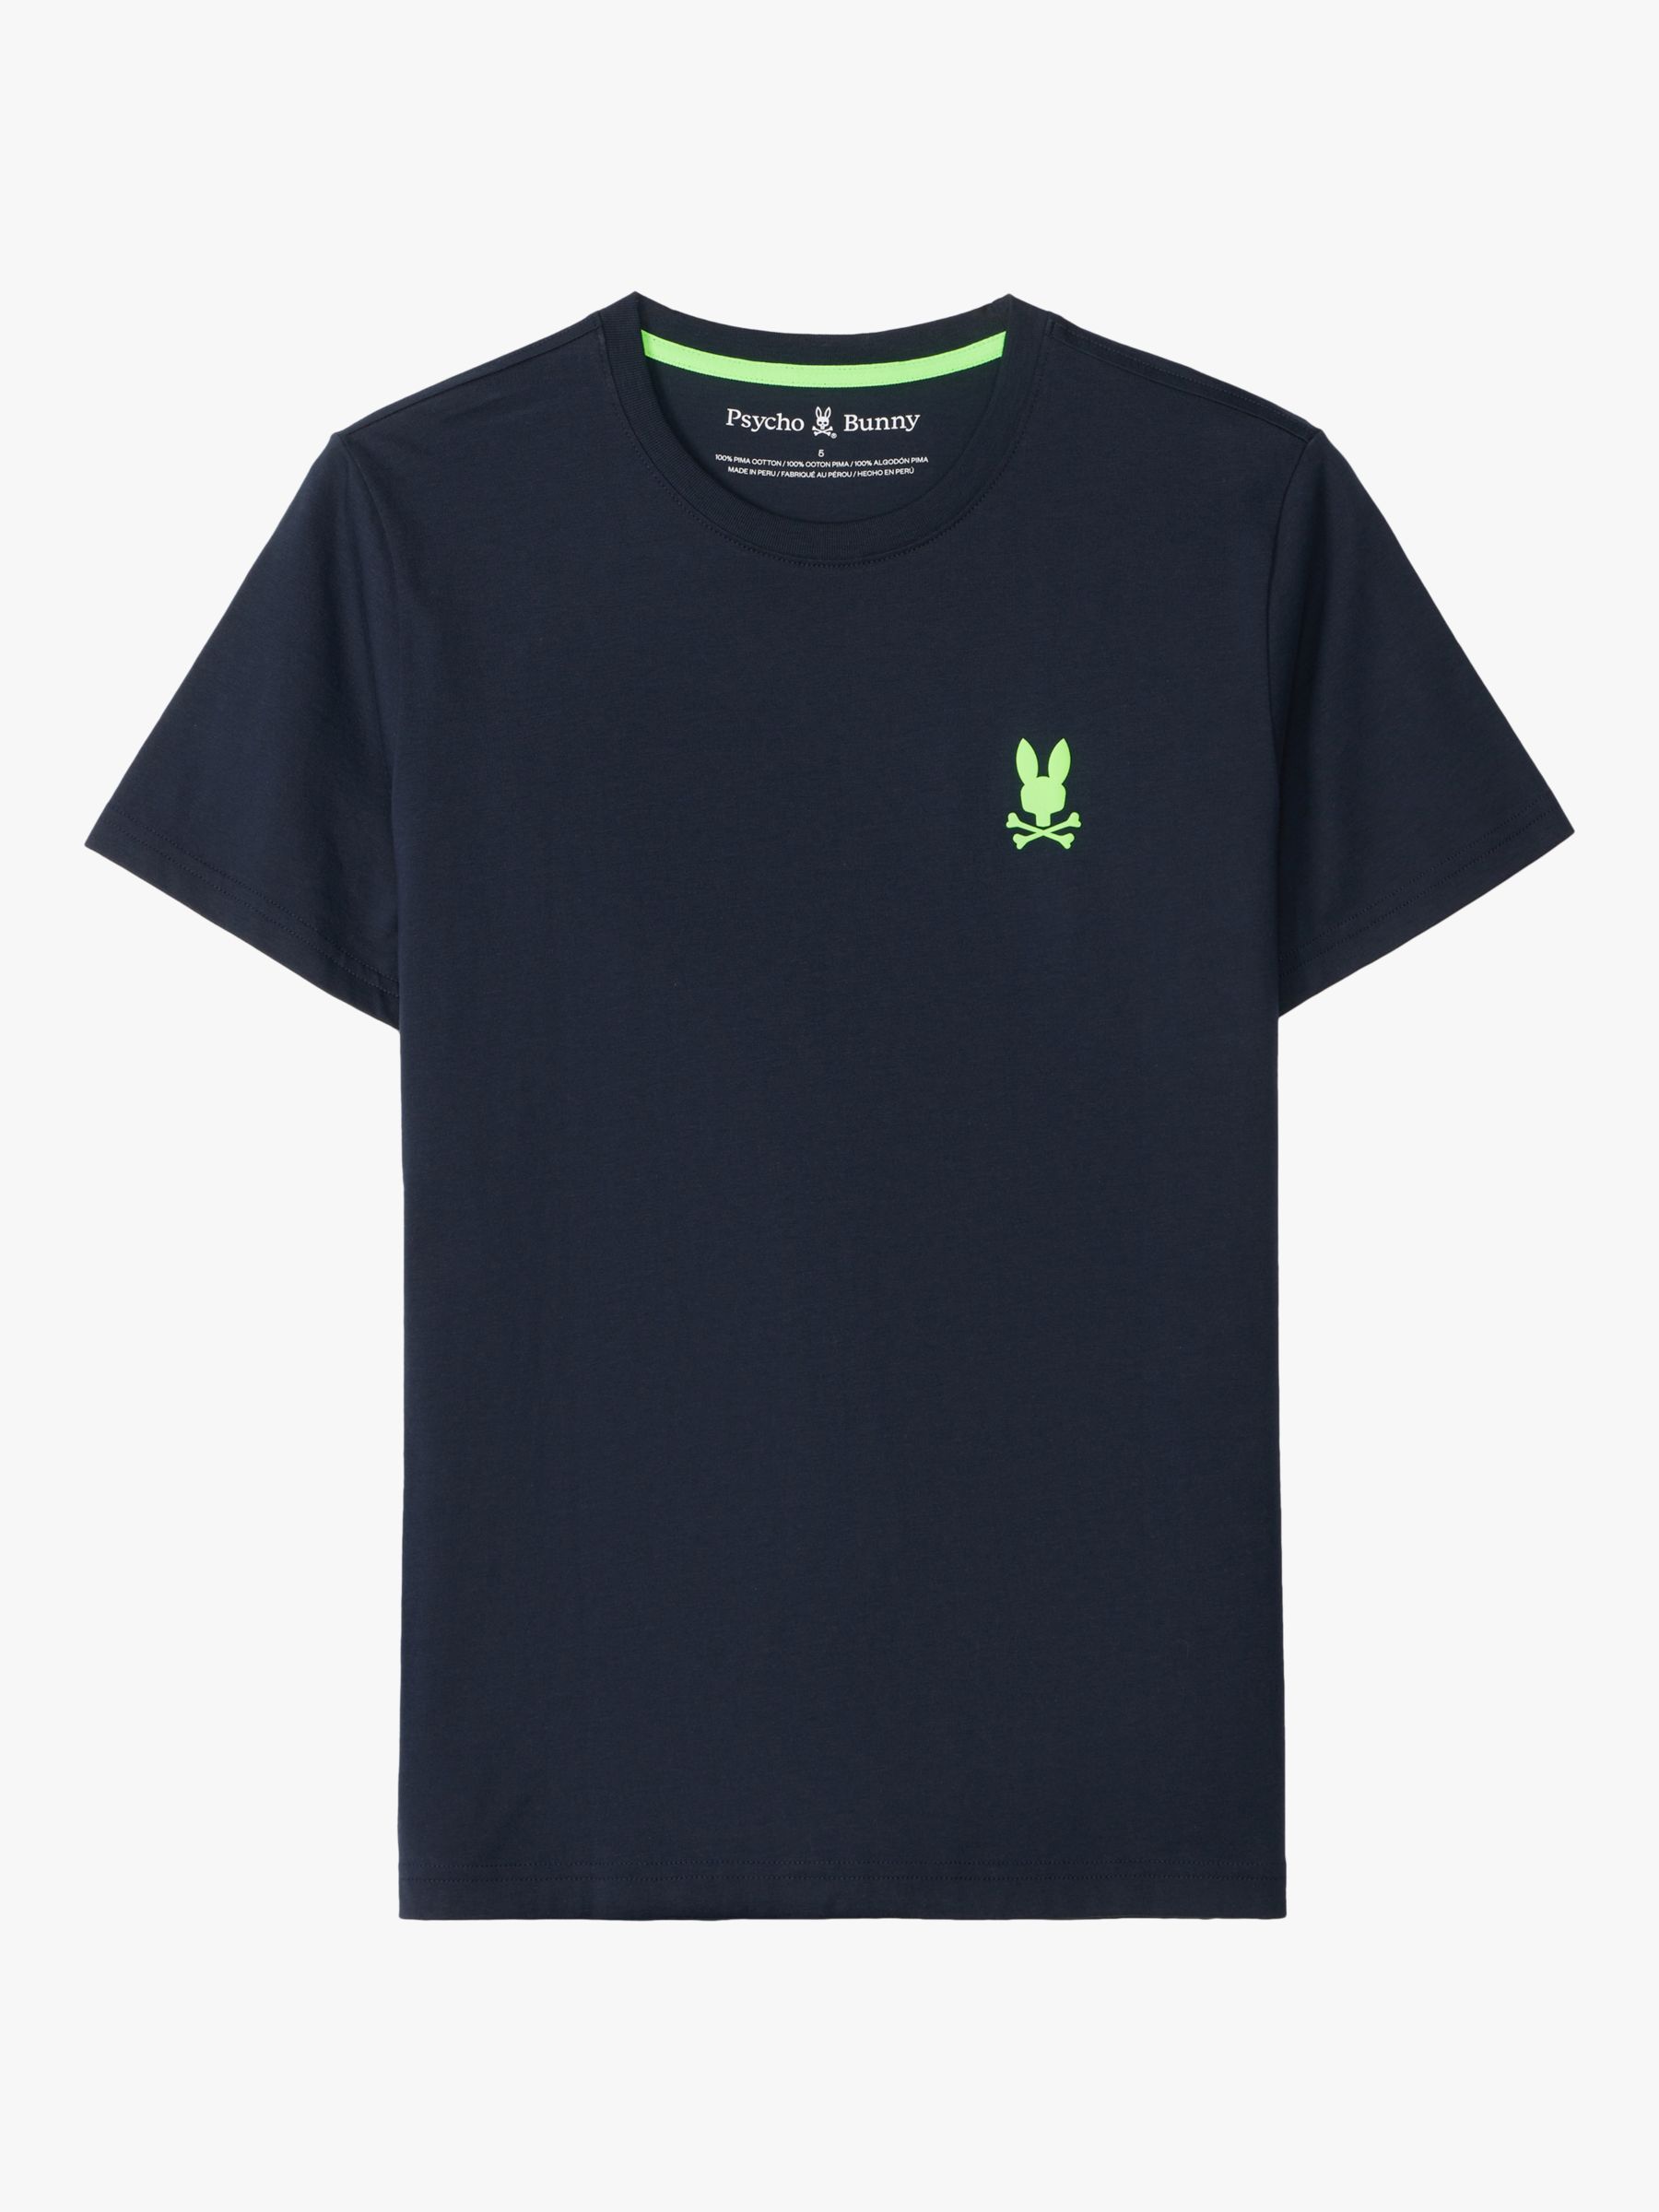 Psycho Bunny Sloan Back Graphic T-Shirt, Navy/Multi, L